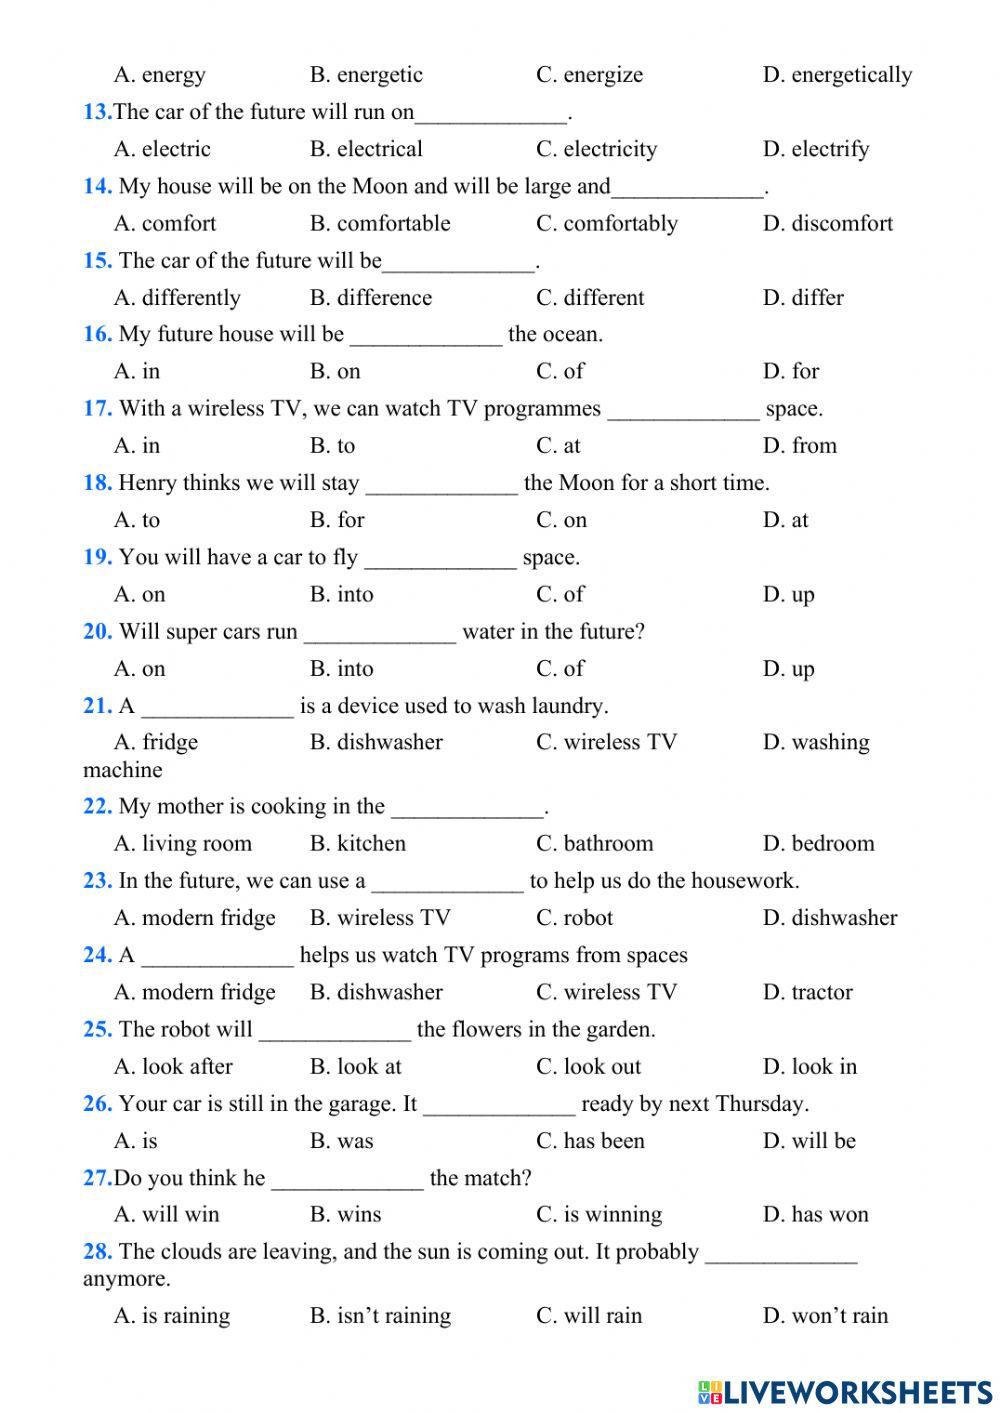 English 6 - unit 10 - vocabulary and grammar